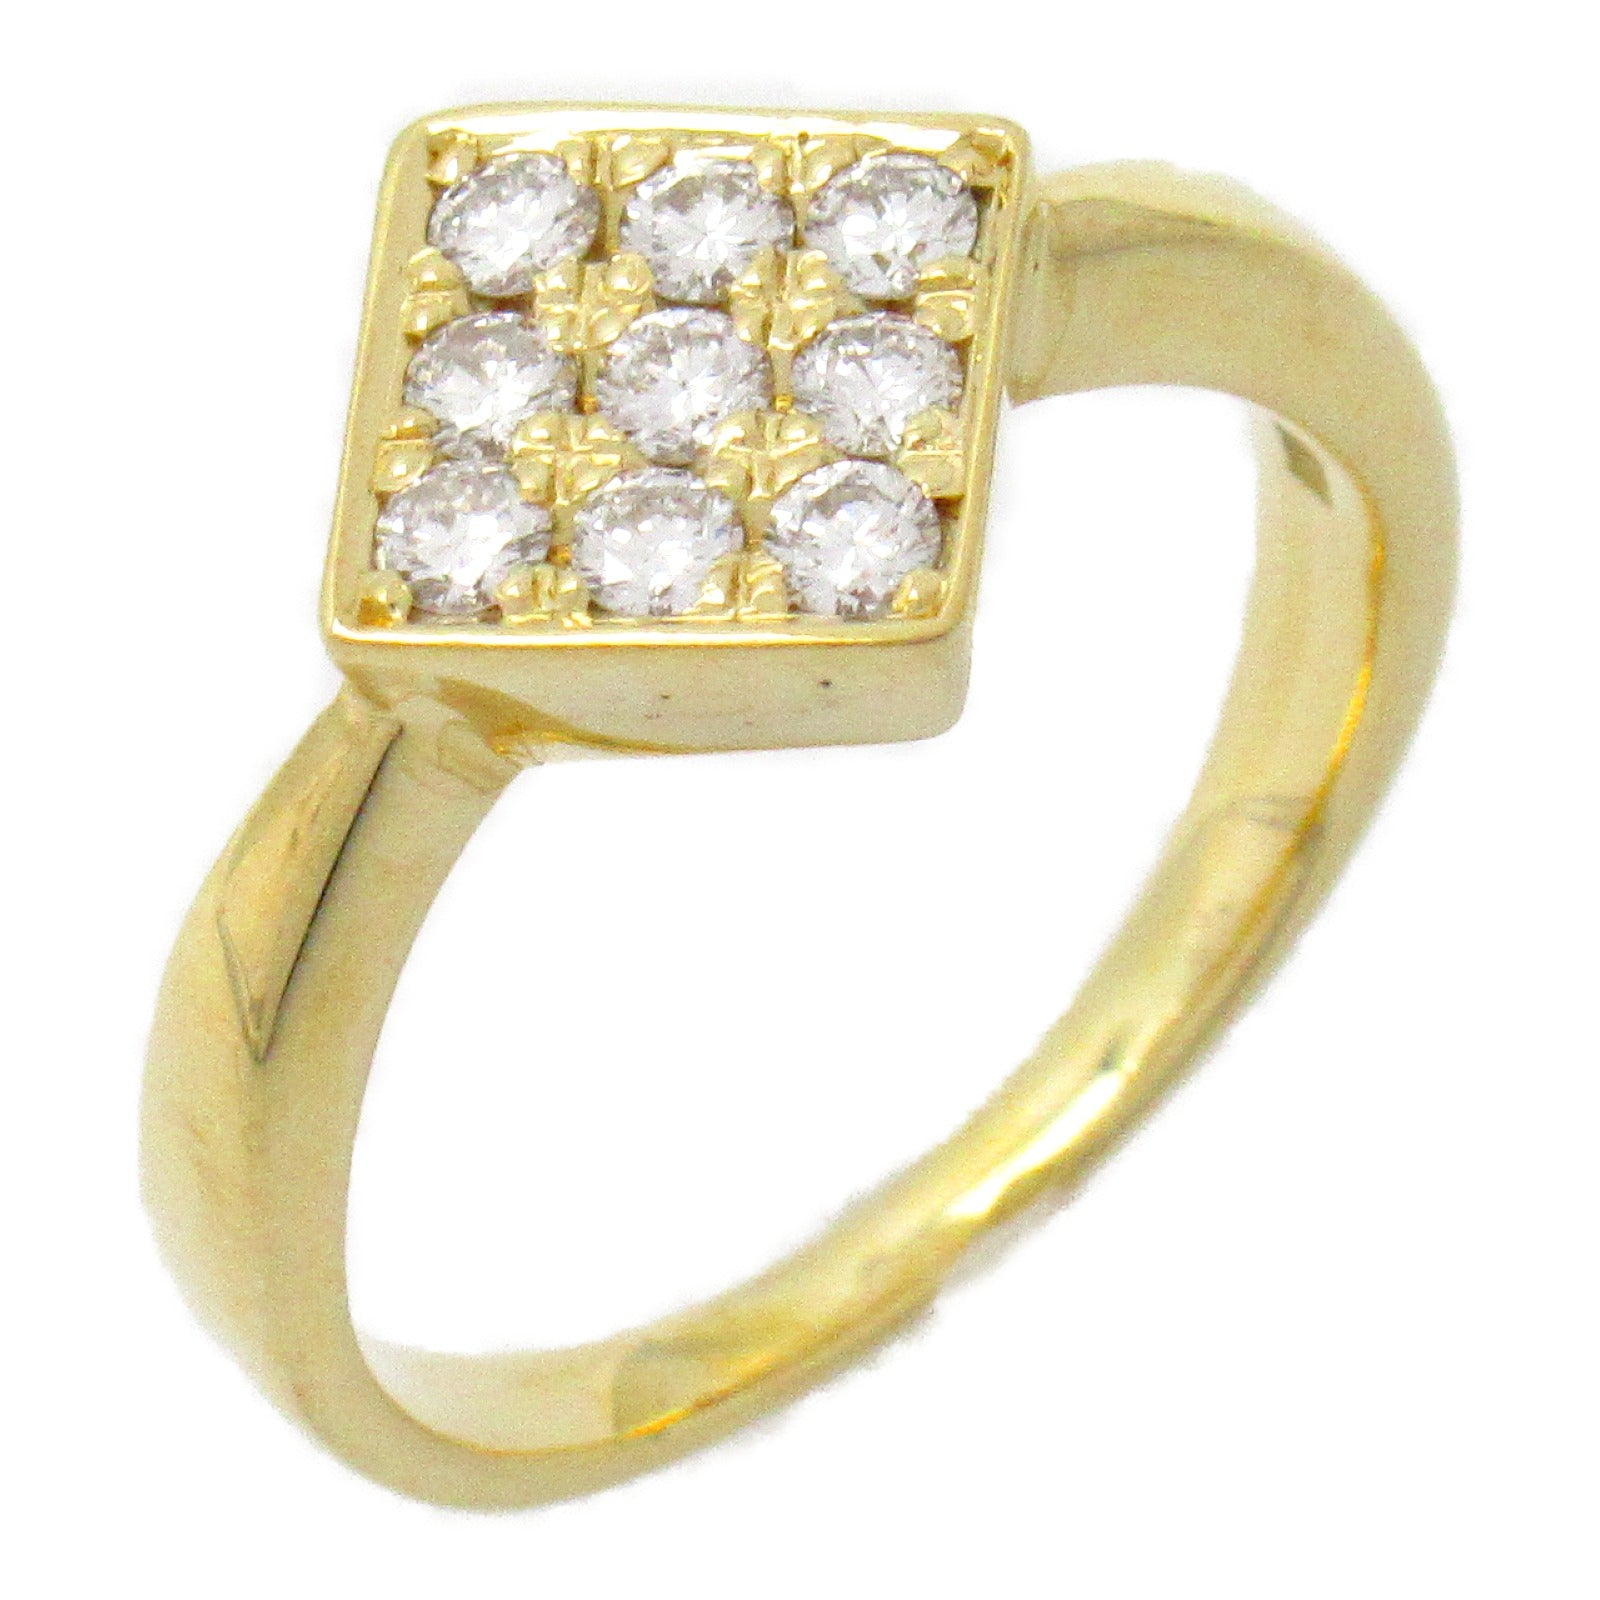 Jewelry Jewelry Diamond Ring Ring Ring Jewelry K18 (Yellow G) Diamond  Clear Diamond 4.7g